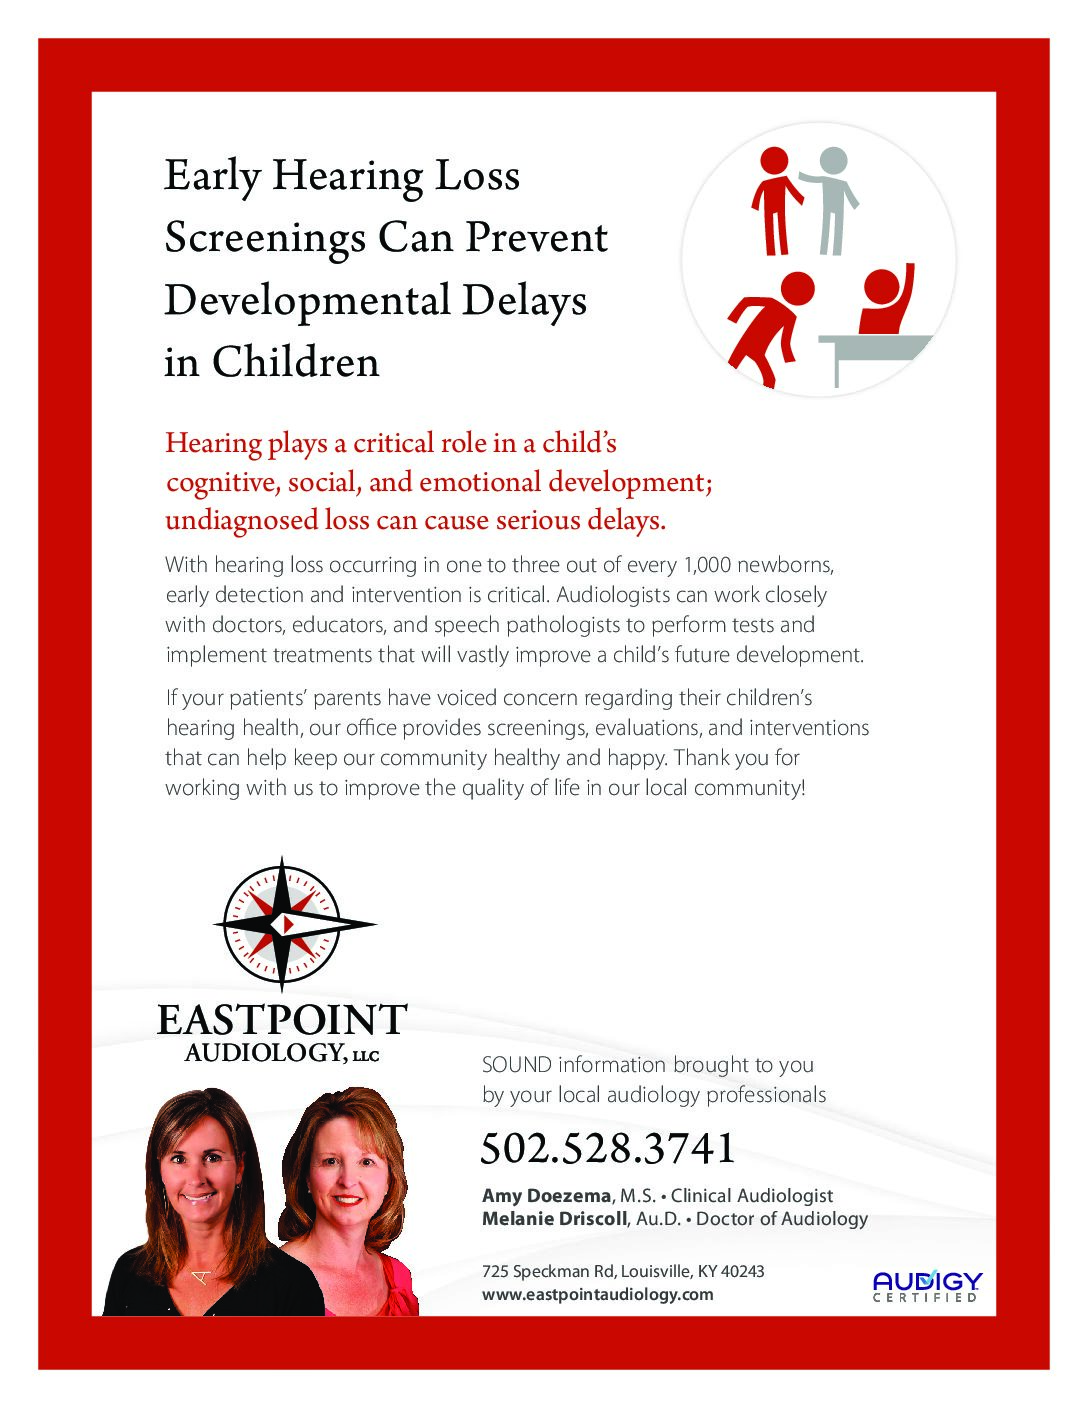 Early Hearing Loss Screenings Can Prevent Developmental Delays in Children - Newsletter